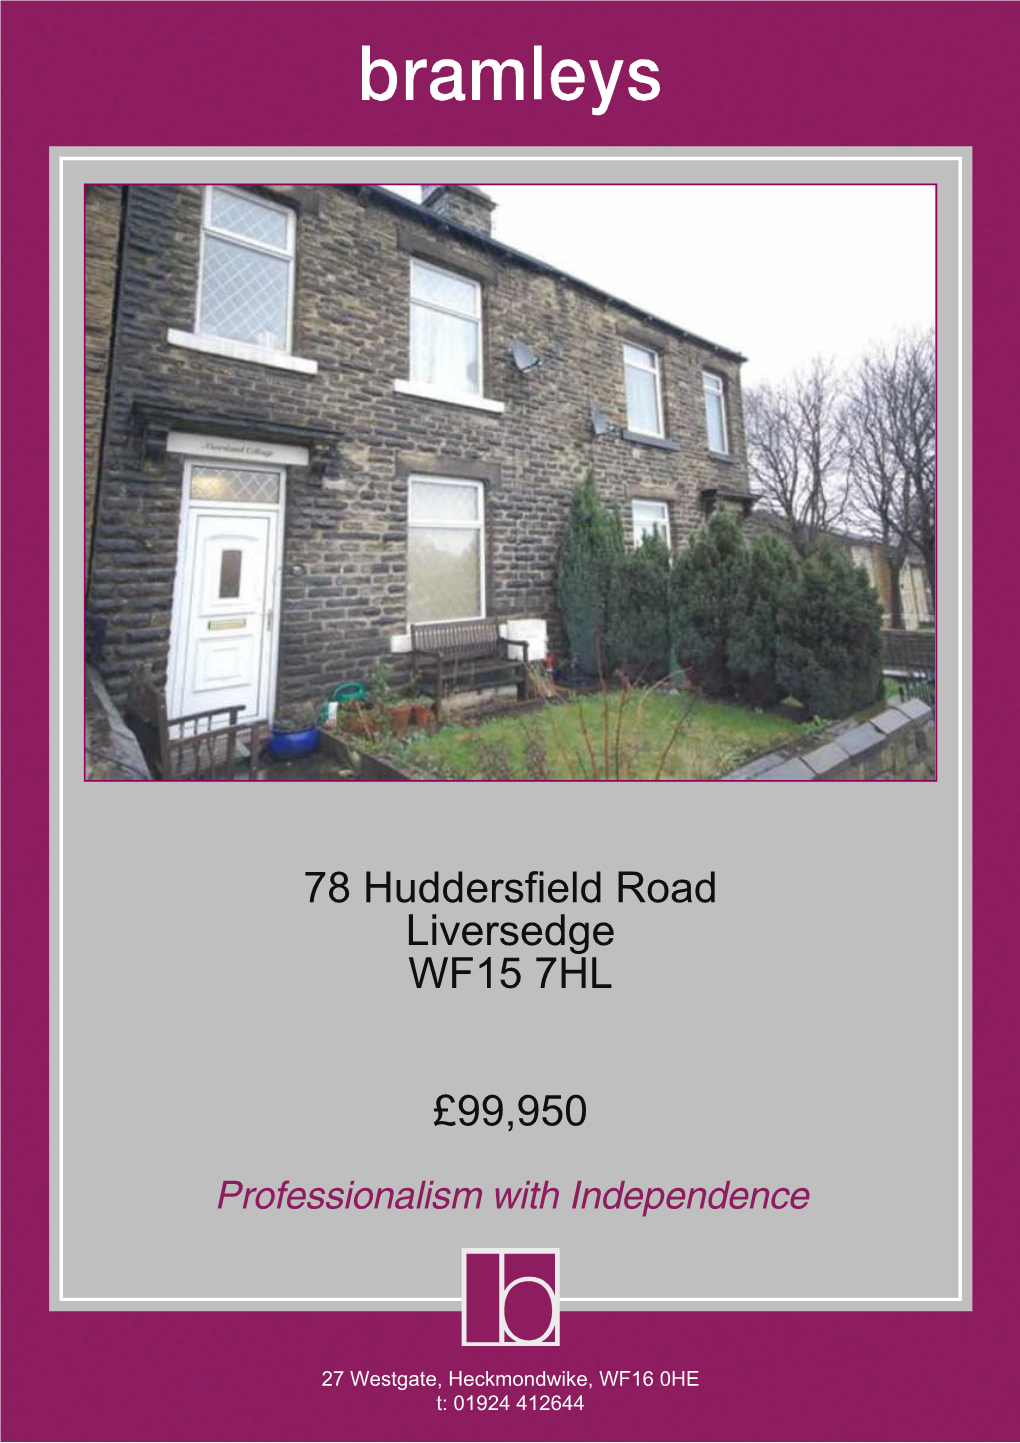 78 Huddersfield Road Liversedge WF15 7HL £99,950